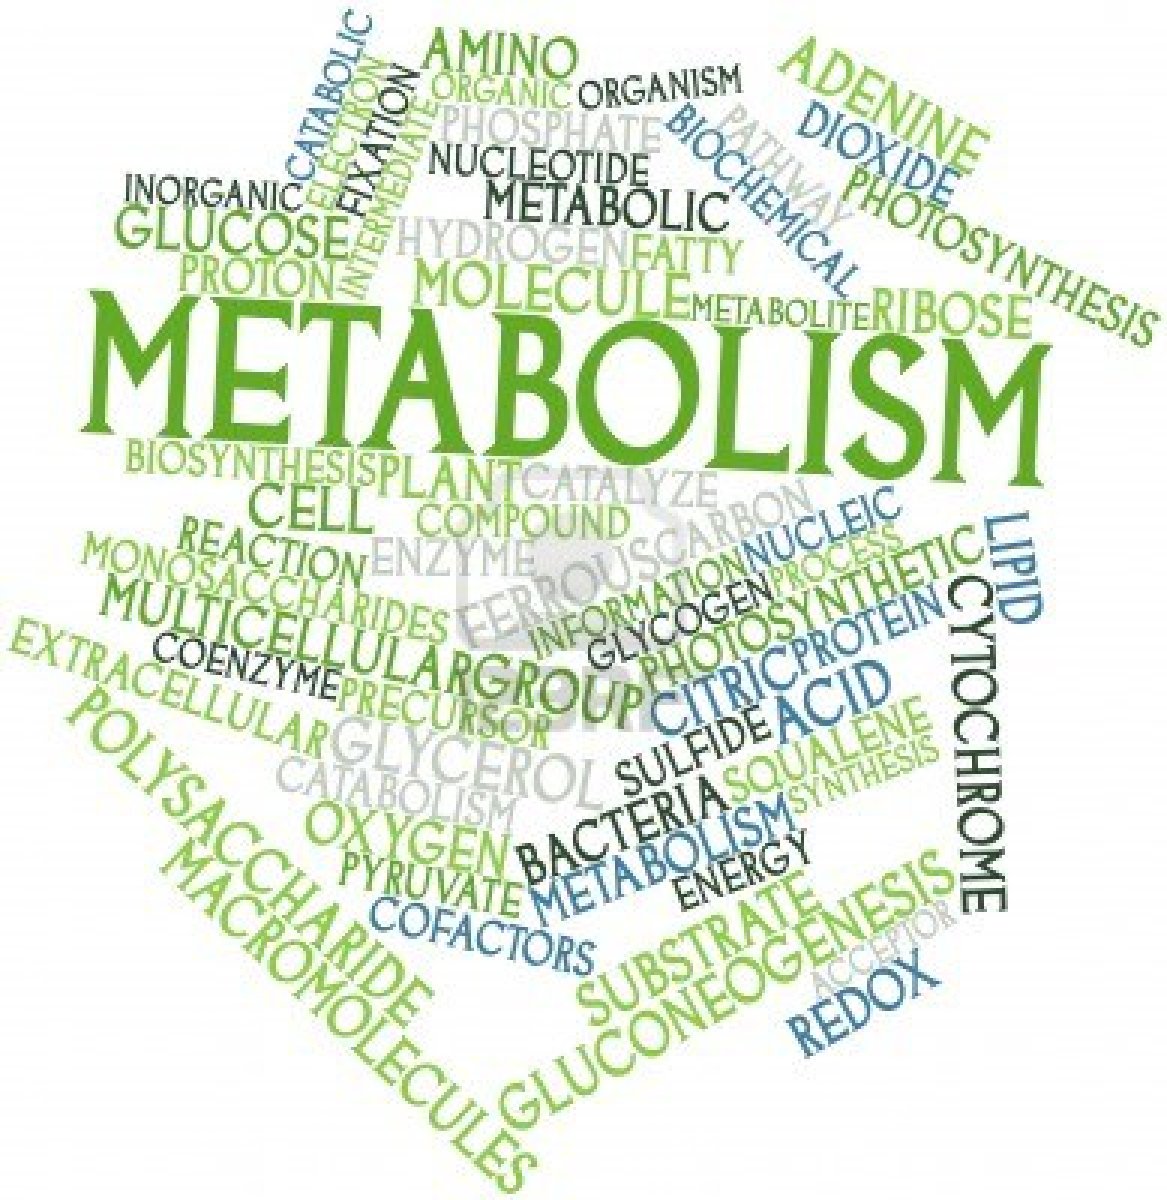 It's My Metabolism - HONEST!